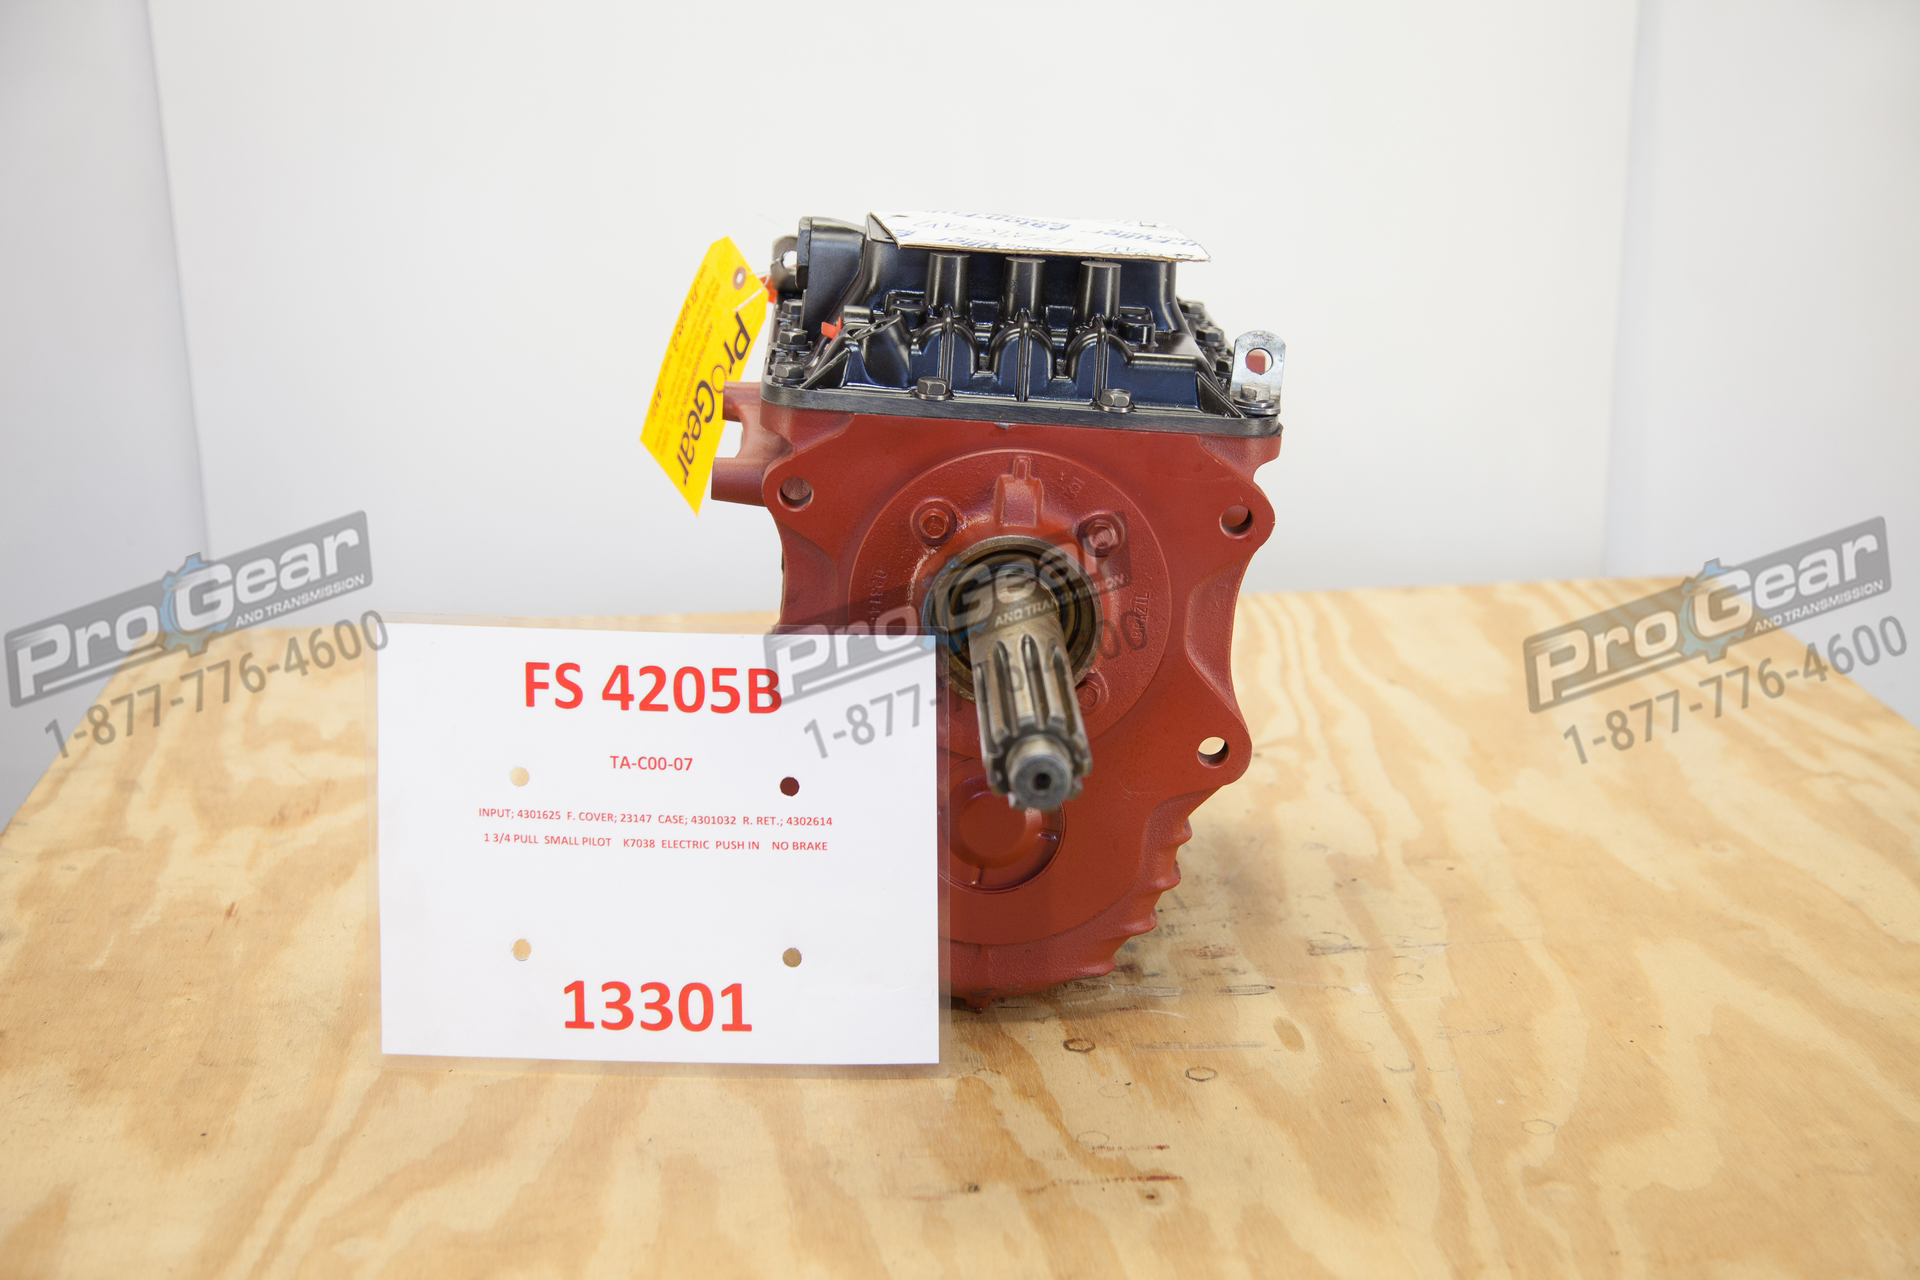 Eaton Fuller RT-11109A-ATR transmission for sale